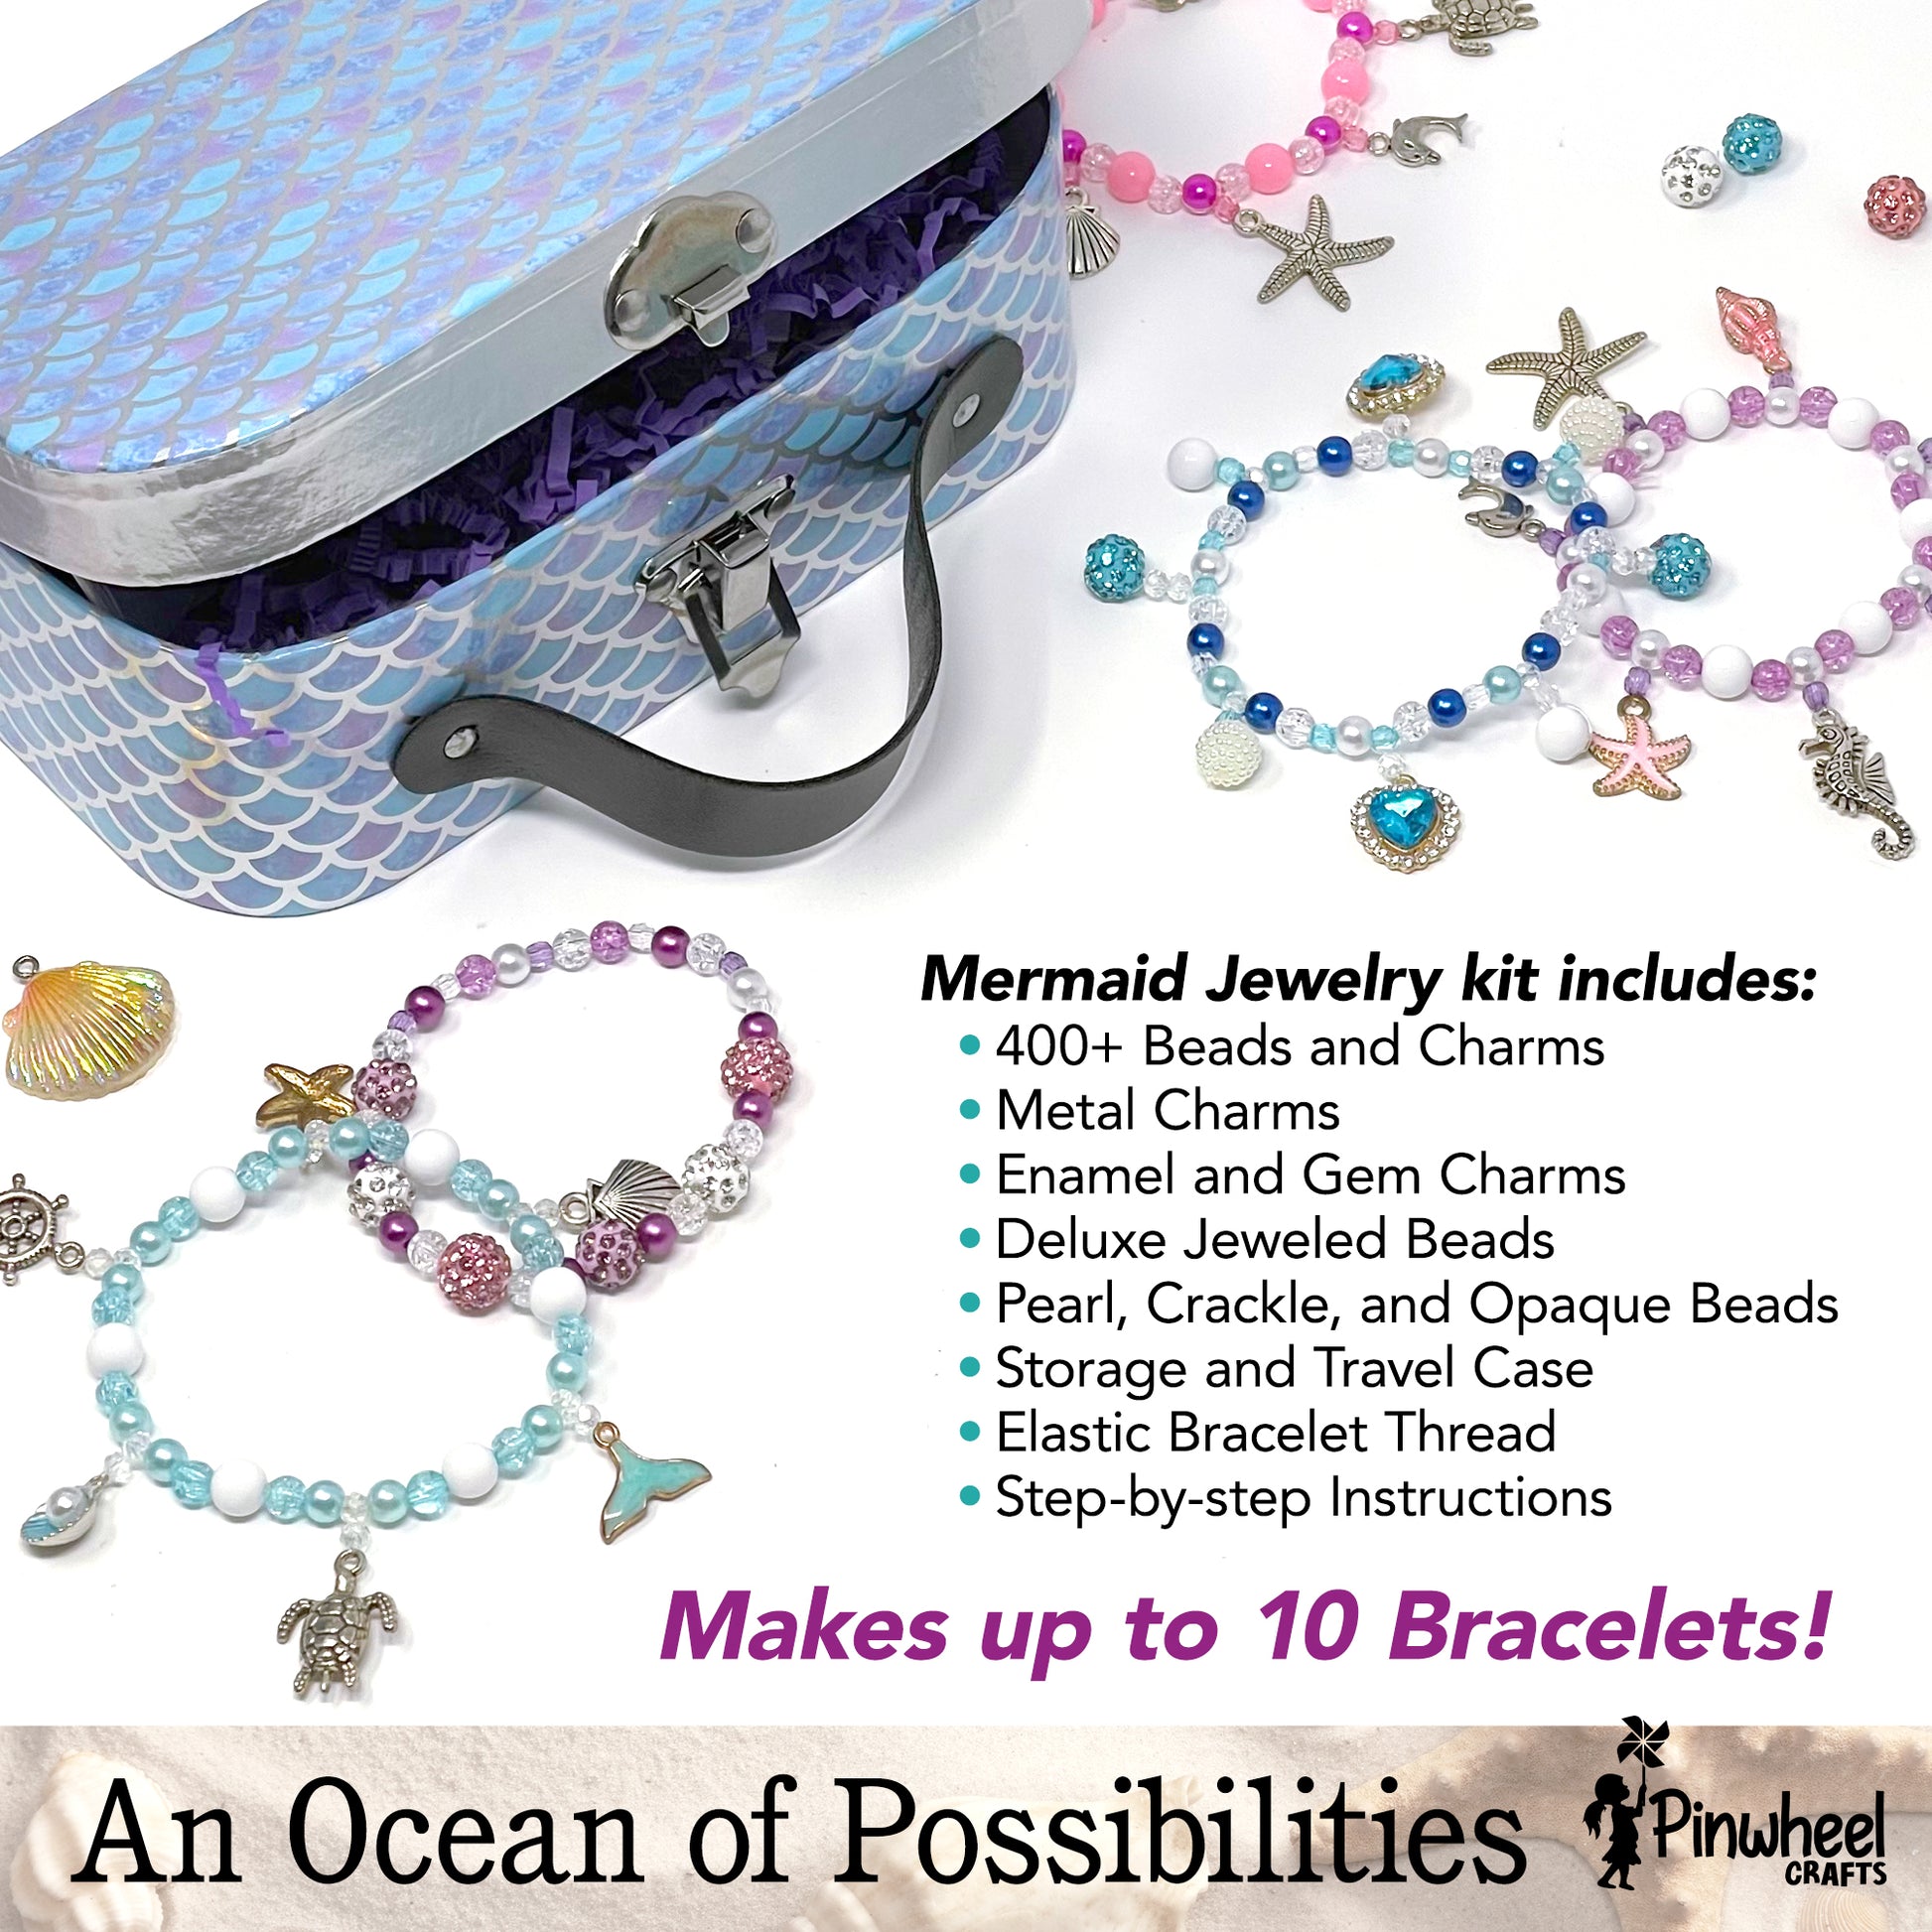 Pinwheel Crafts Mermaid Jewelry Box Kit for Kids